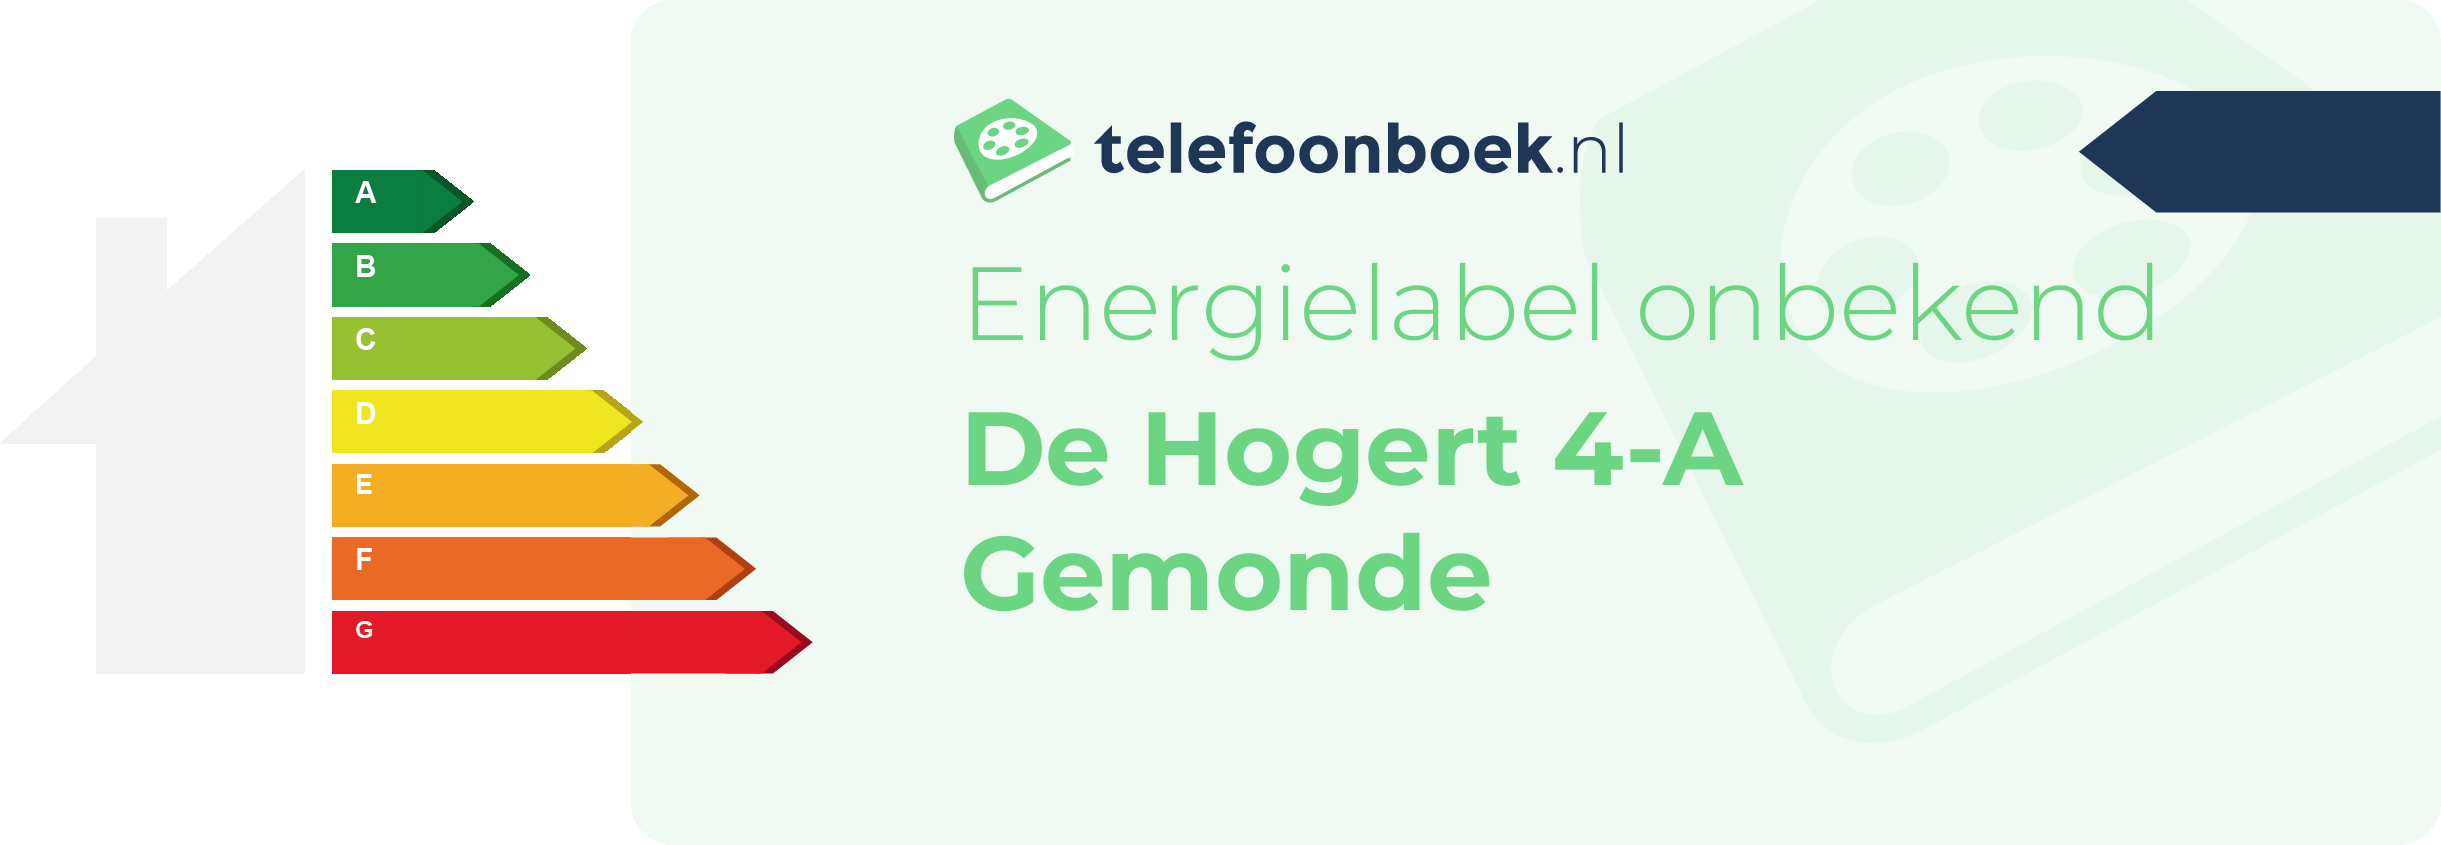 Energielabel De Hogert 4-A Gemonde